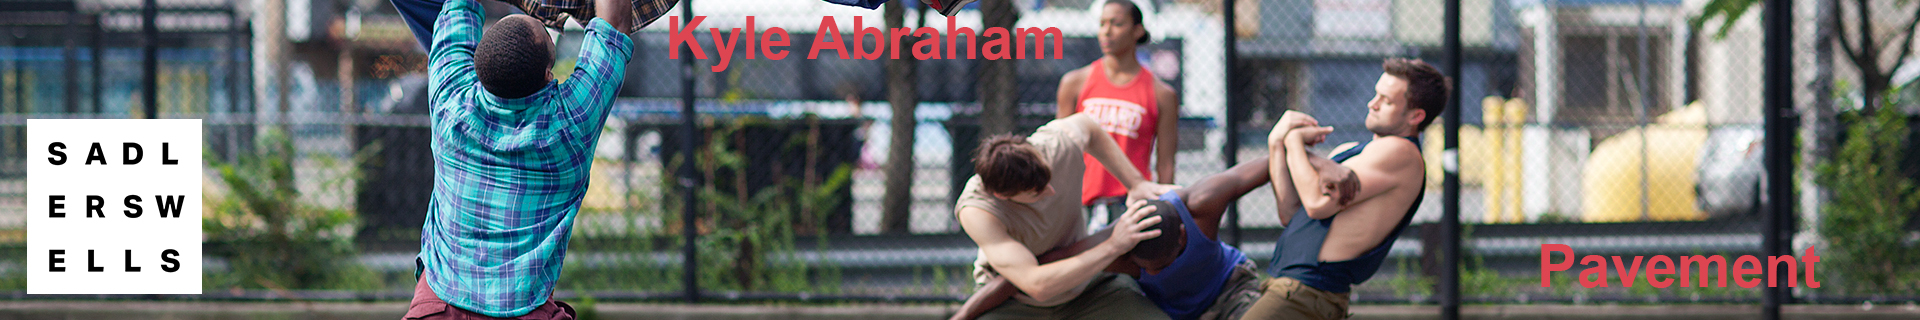 Kyle Abraham- Abraham.In.Motion — Pavement Header Image
